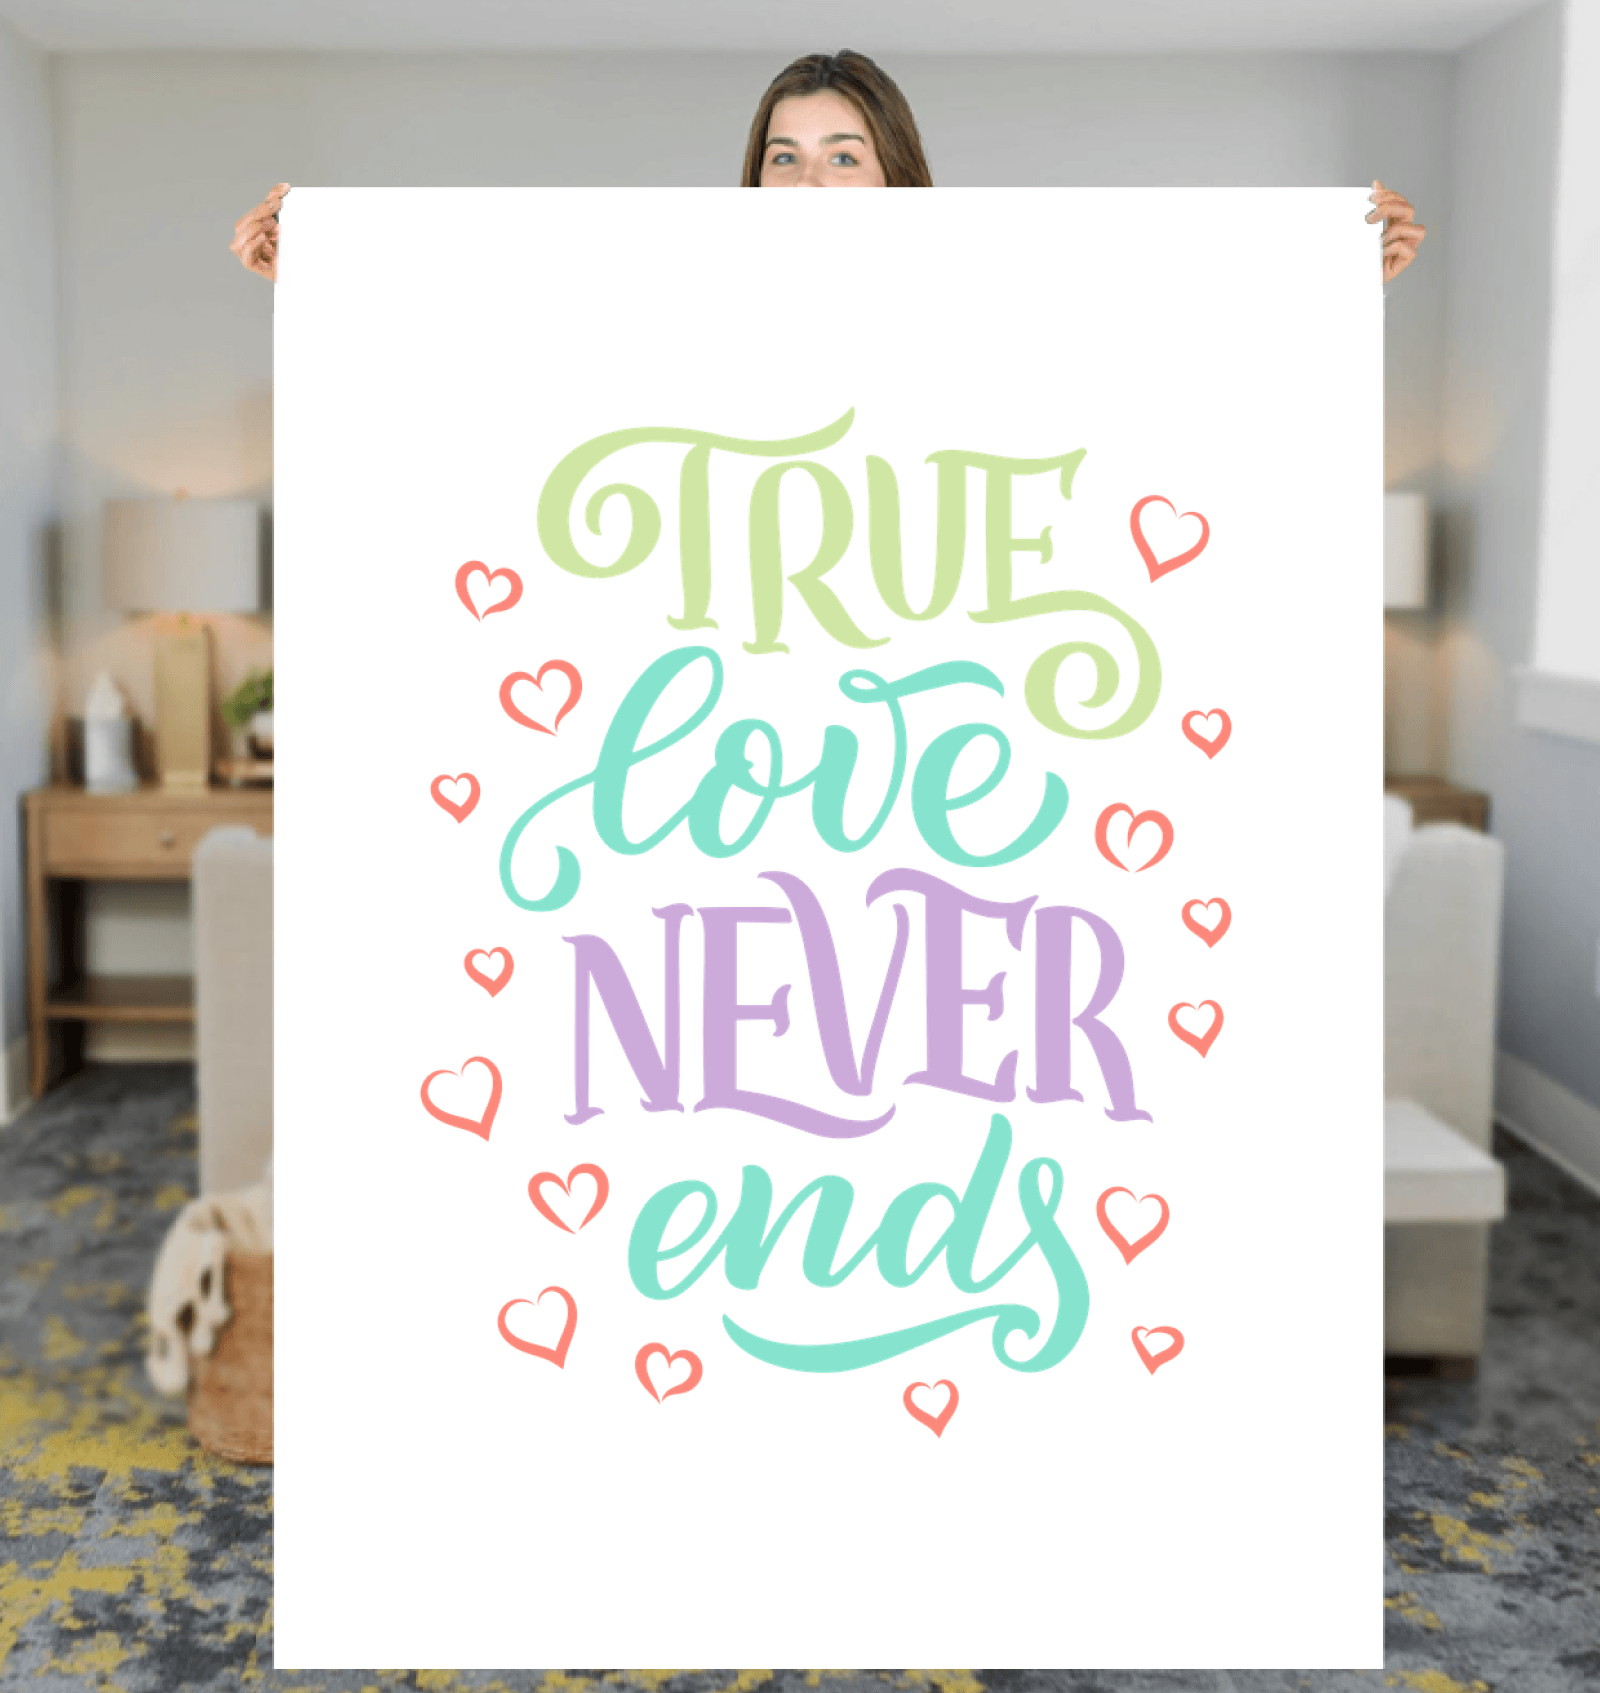 True Love Sherpa Blanket - Beyond T-shirts